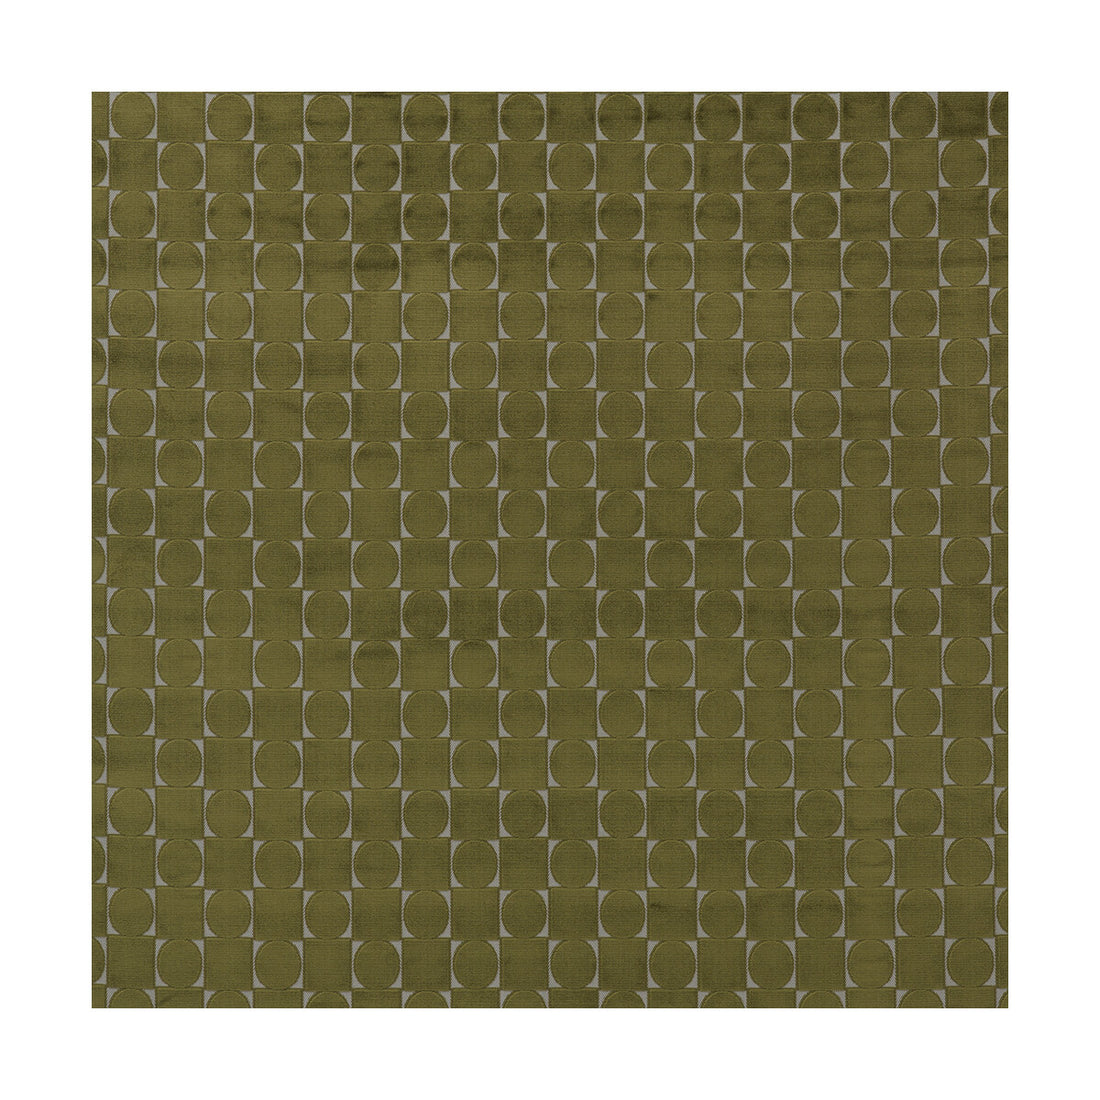 Luigi fabric in verde color - pattern LCT4453.002.0 - by Gaston y Daniela in the Lorenzo Castillo III collection